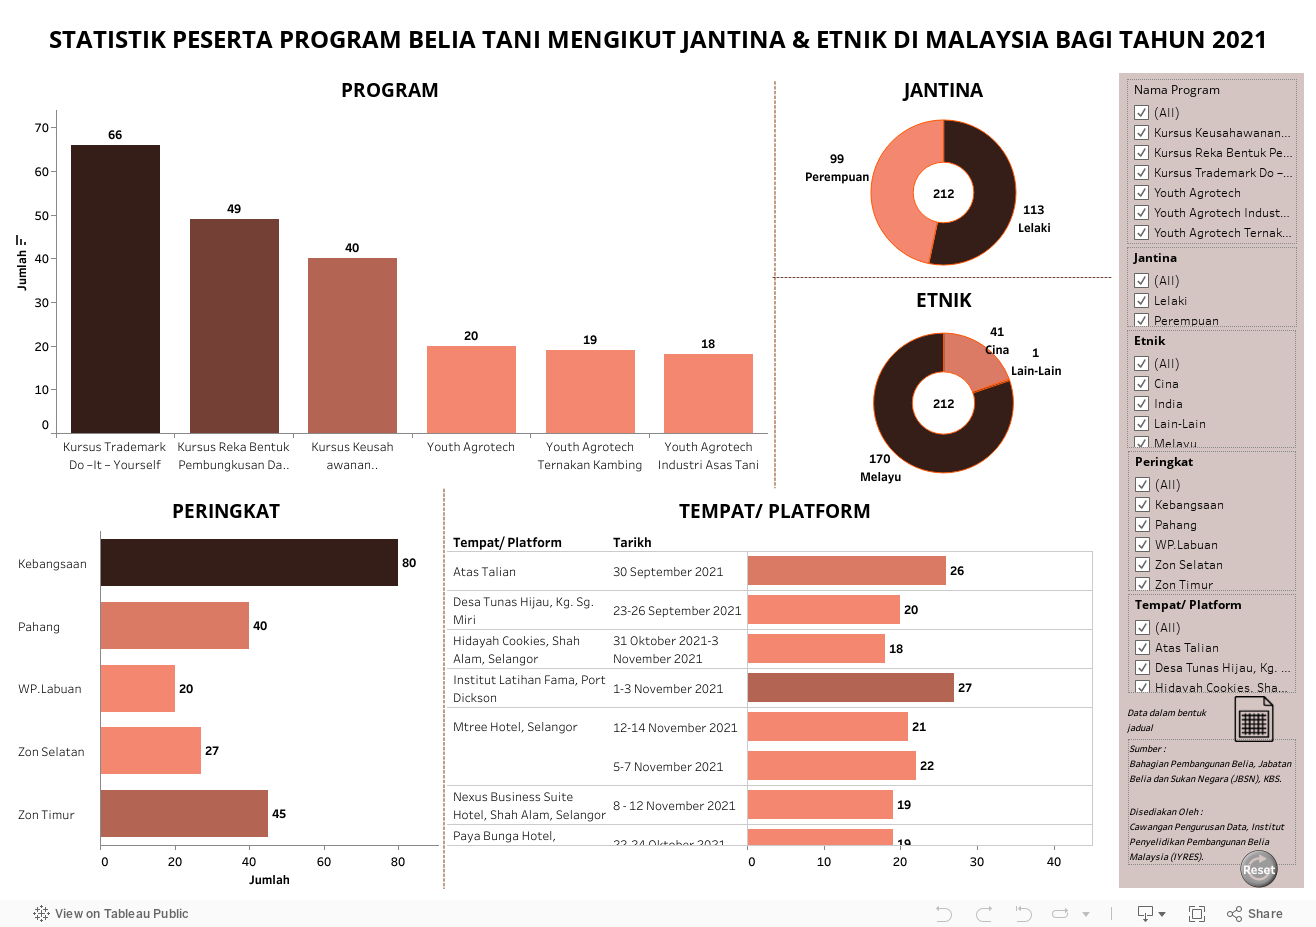 STATISTIK PESERTA PROGRAM BELIA TANI MENGIKUT JANTINA & ETNIK DI MALAYSIA BAGI TAHUN 2021 